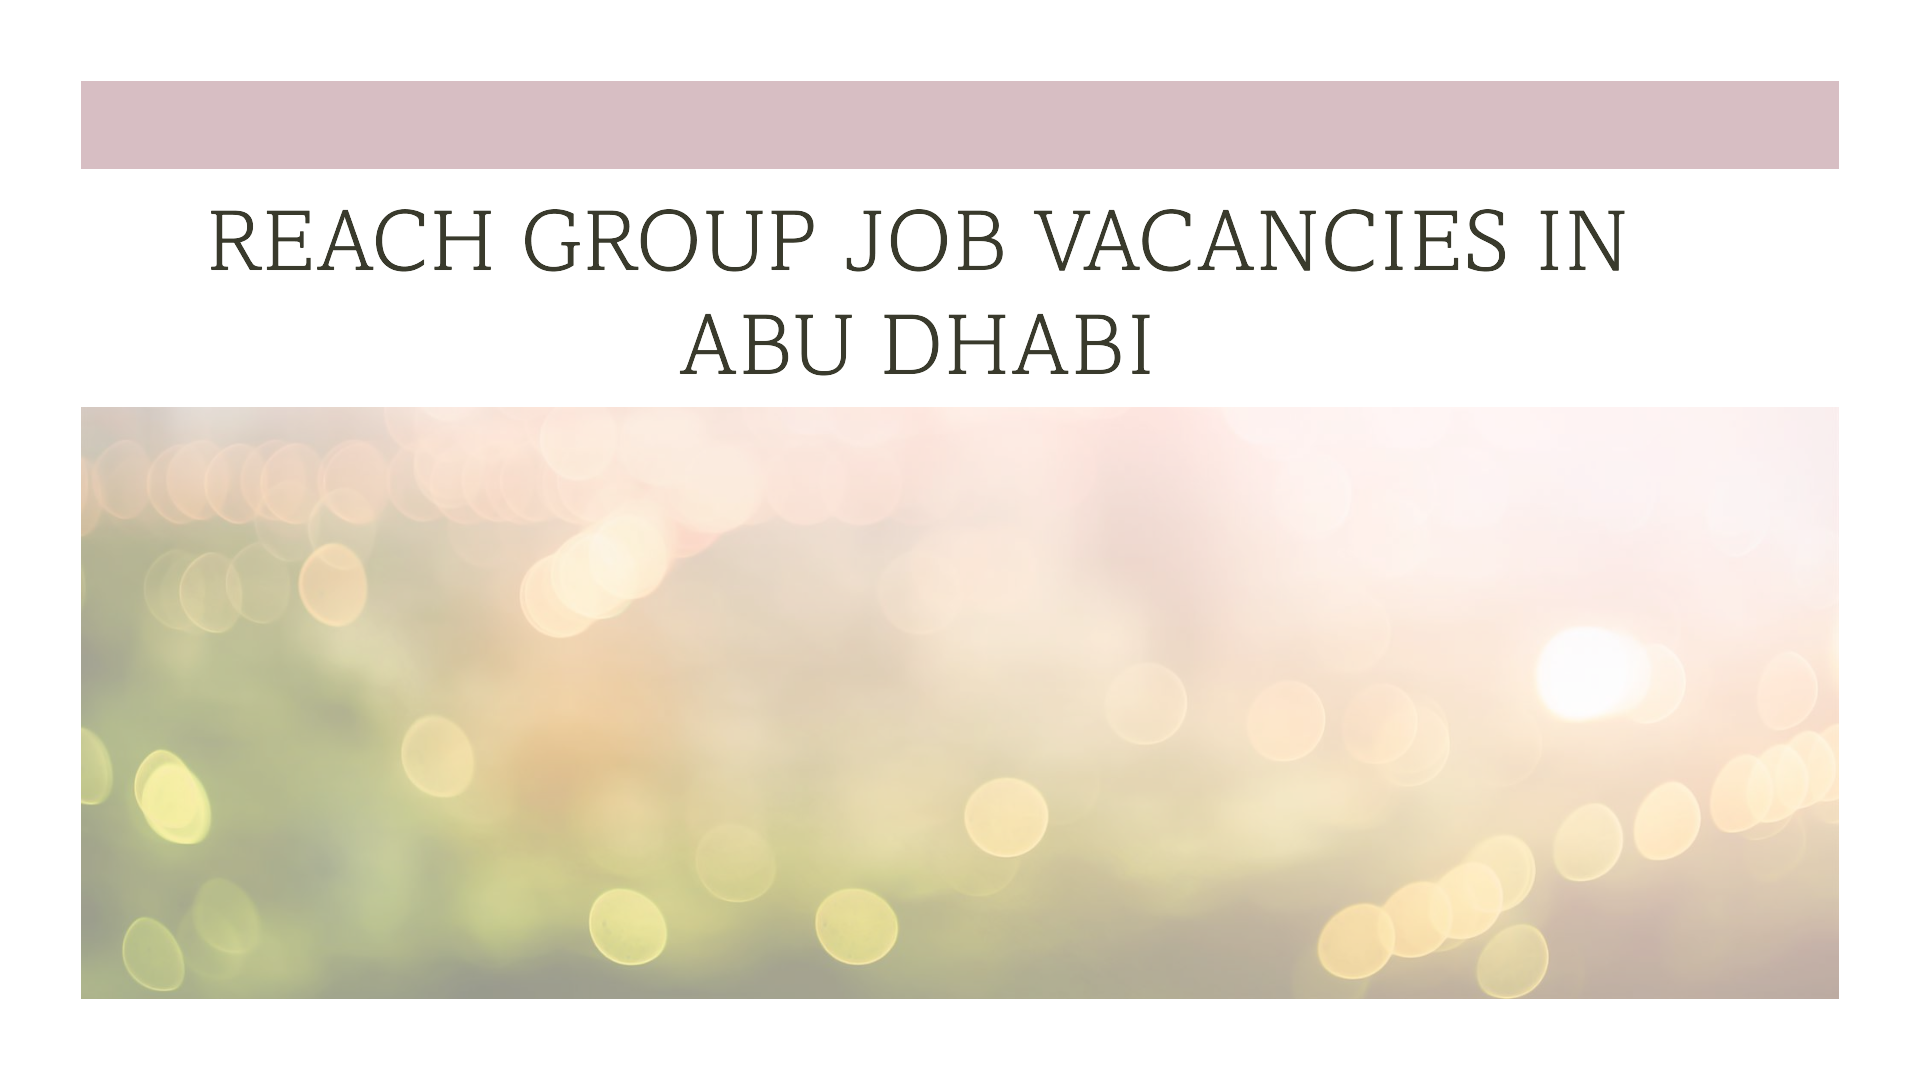 Reach Group job vacancies in Abu Dhabi